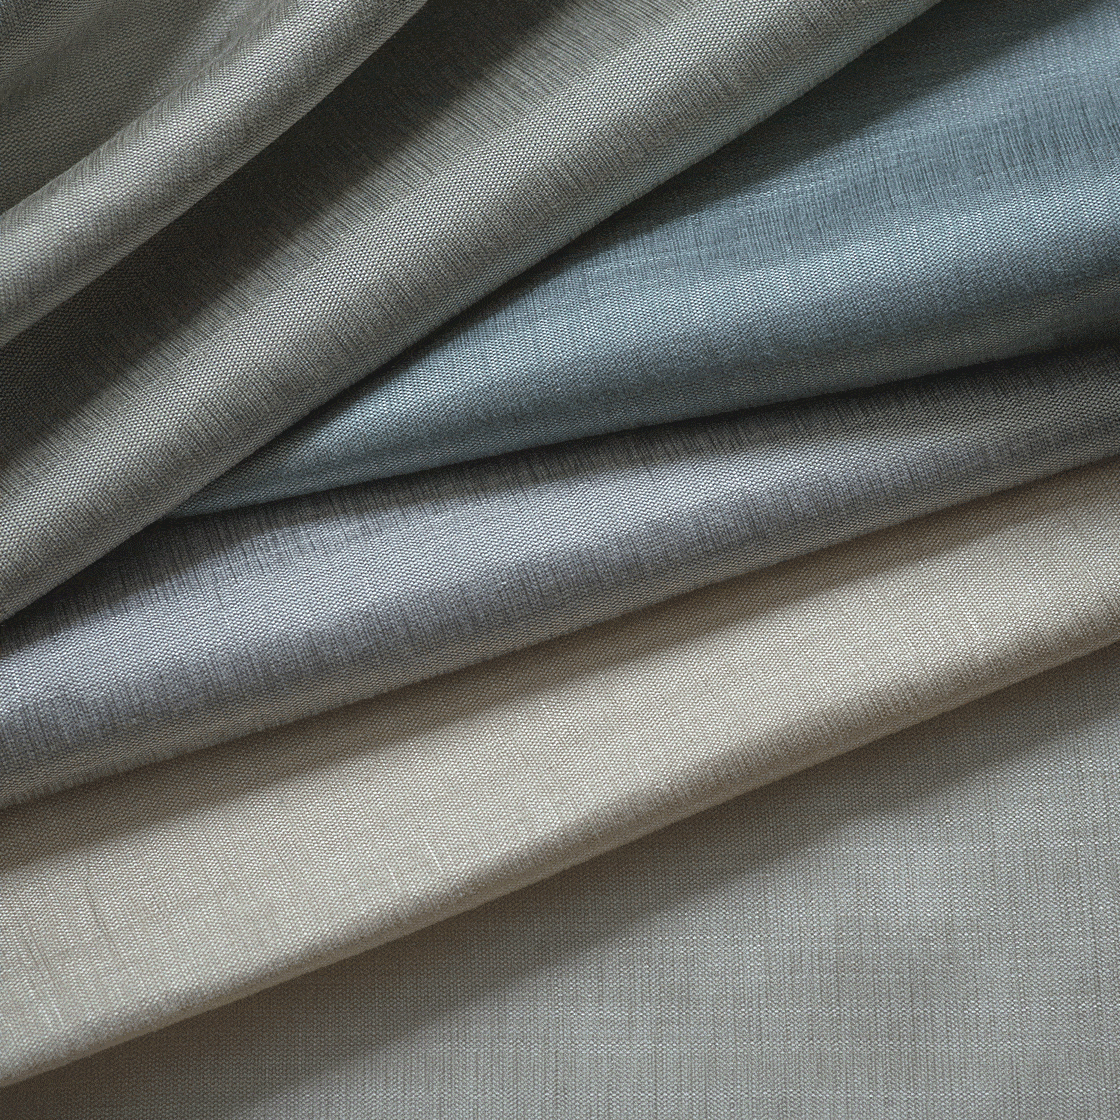 Lagan silk collection - Beaumont & Fletcher